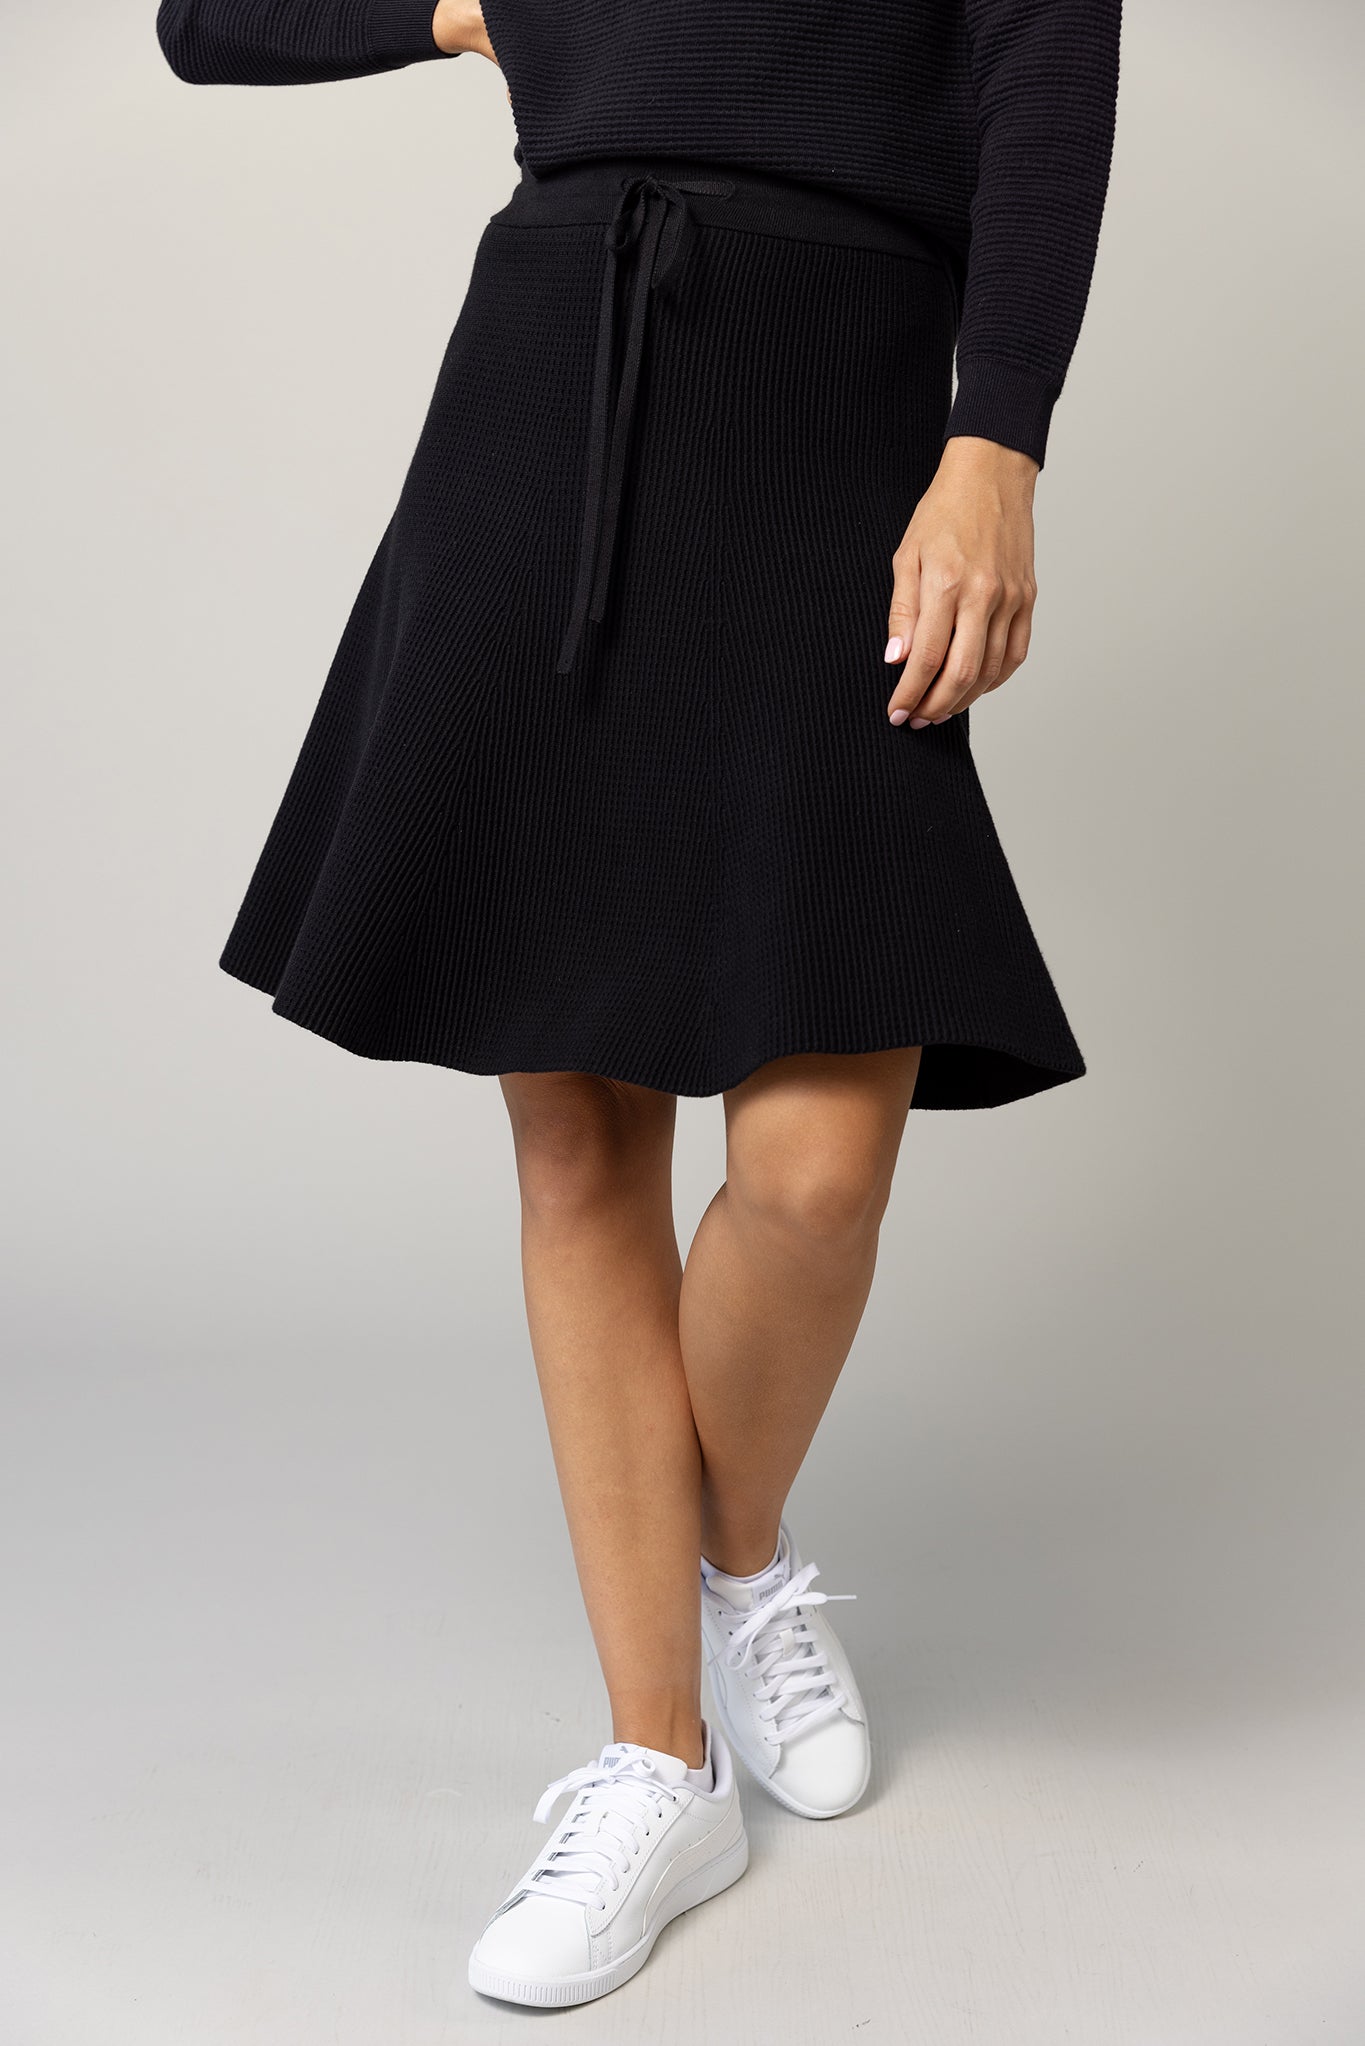 Alinea Circle Skirt in Black